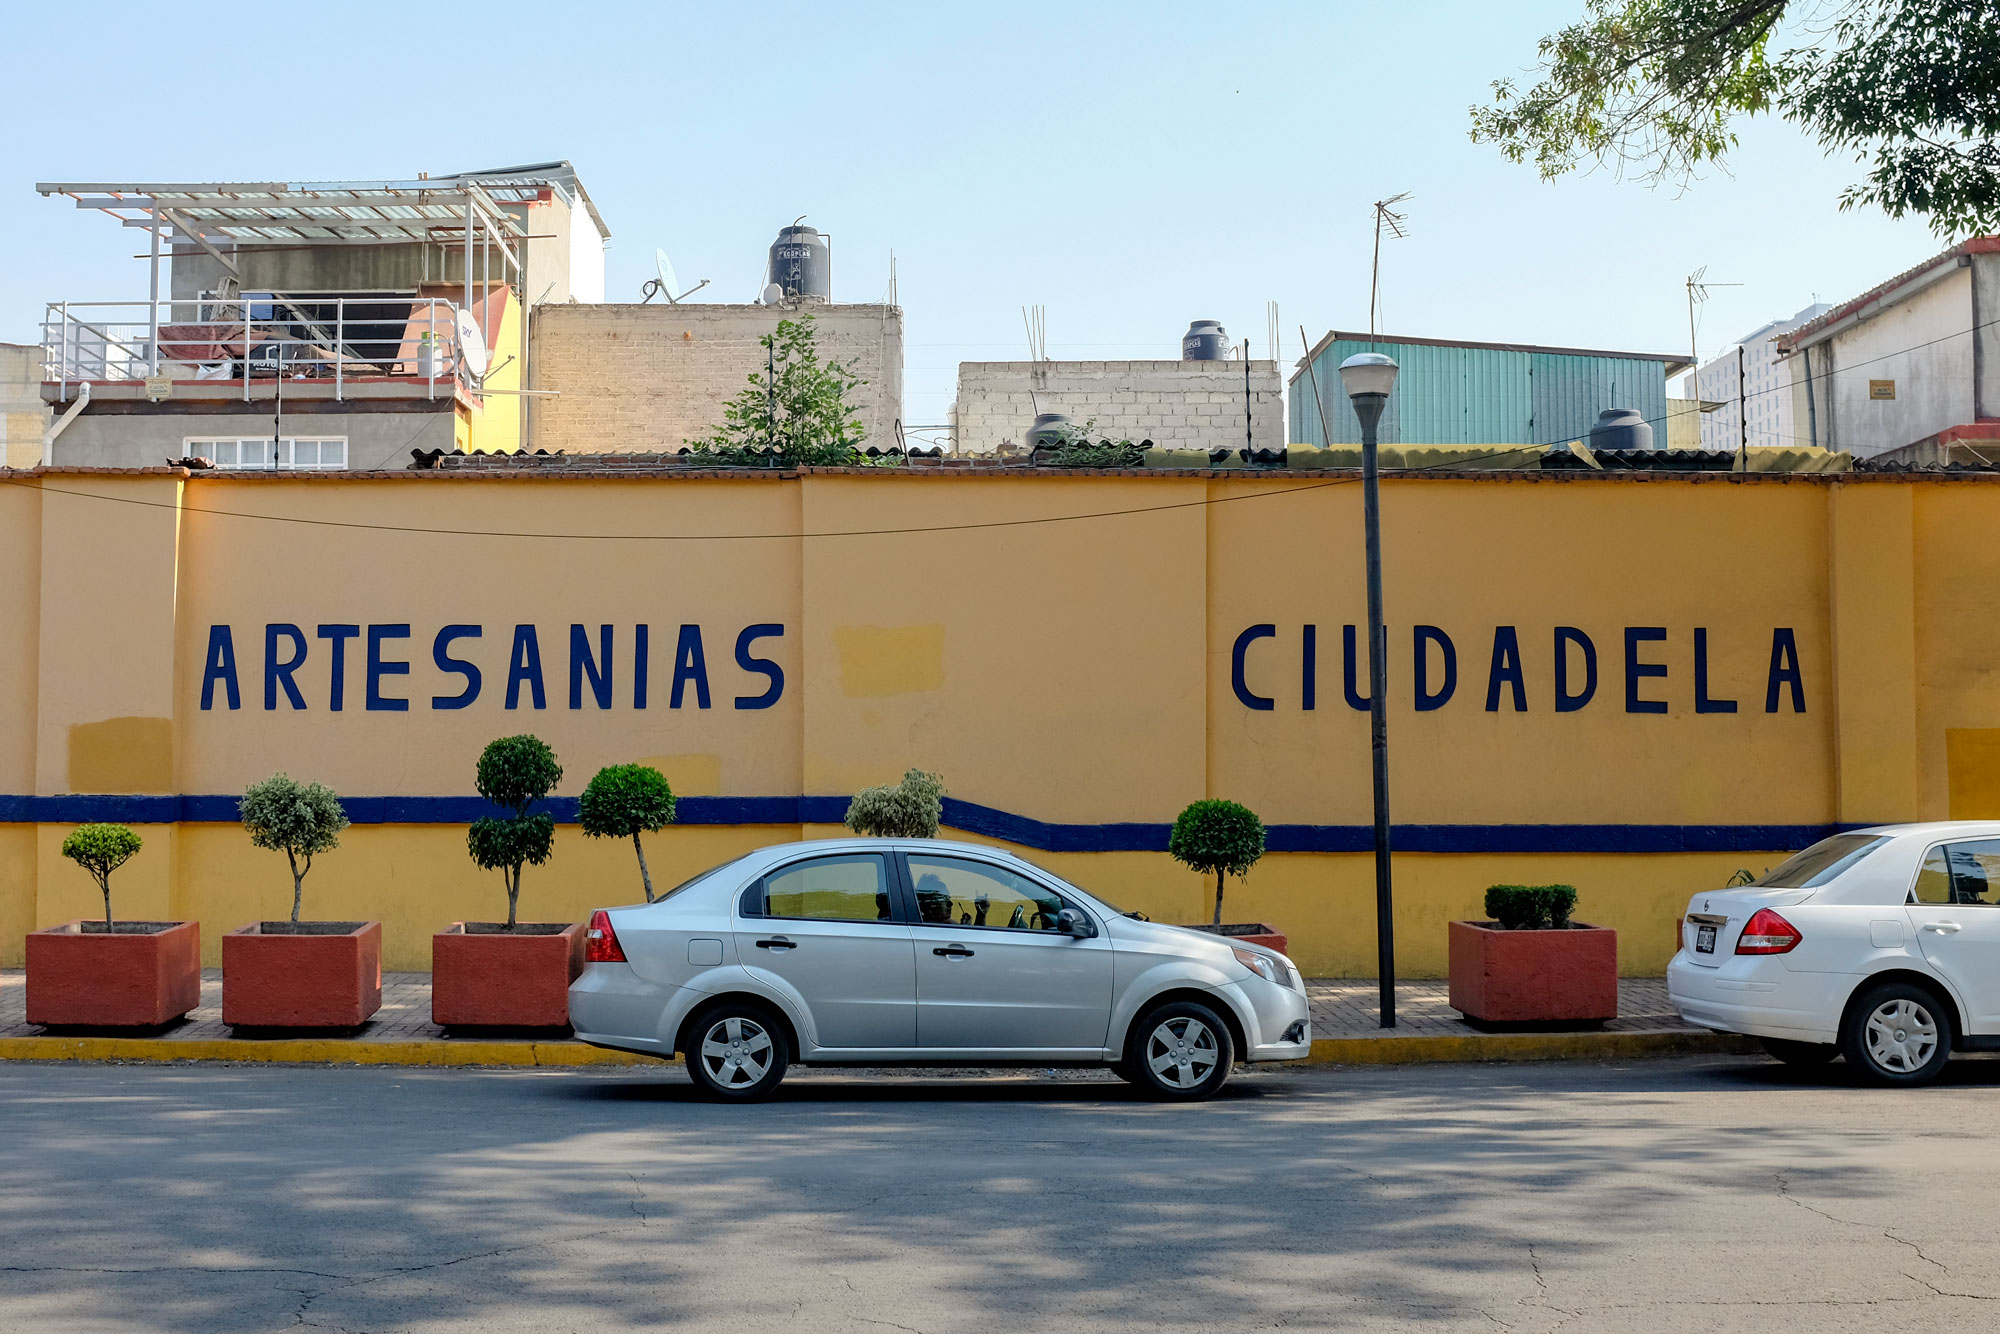 exterior of the artesanal market and it says artesanias ciudadela on the outside